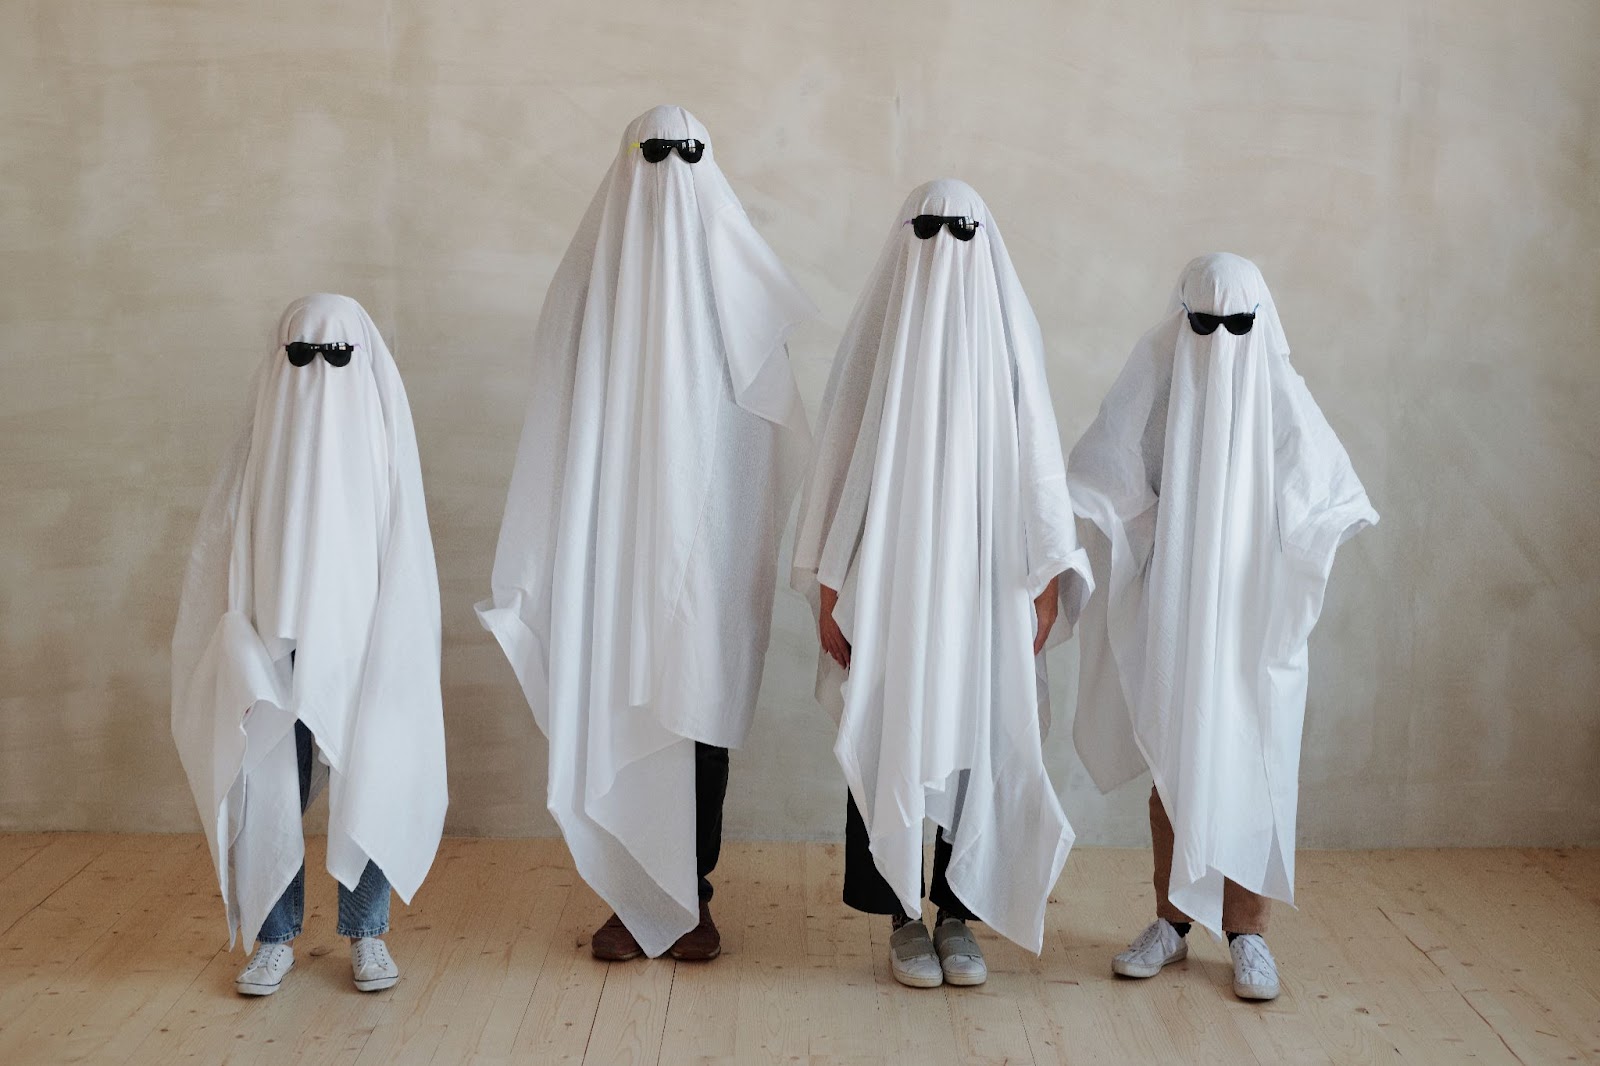 Halloween Costumes Ideas